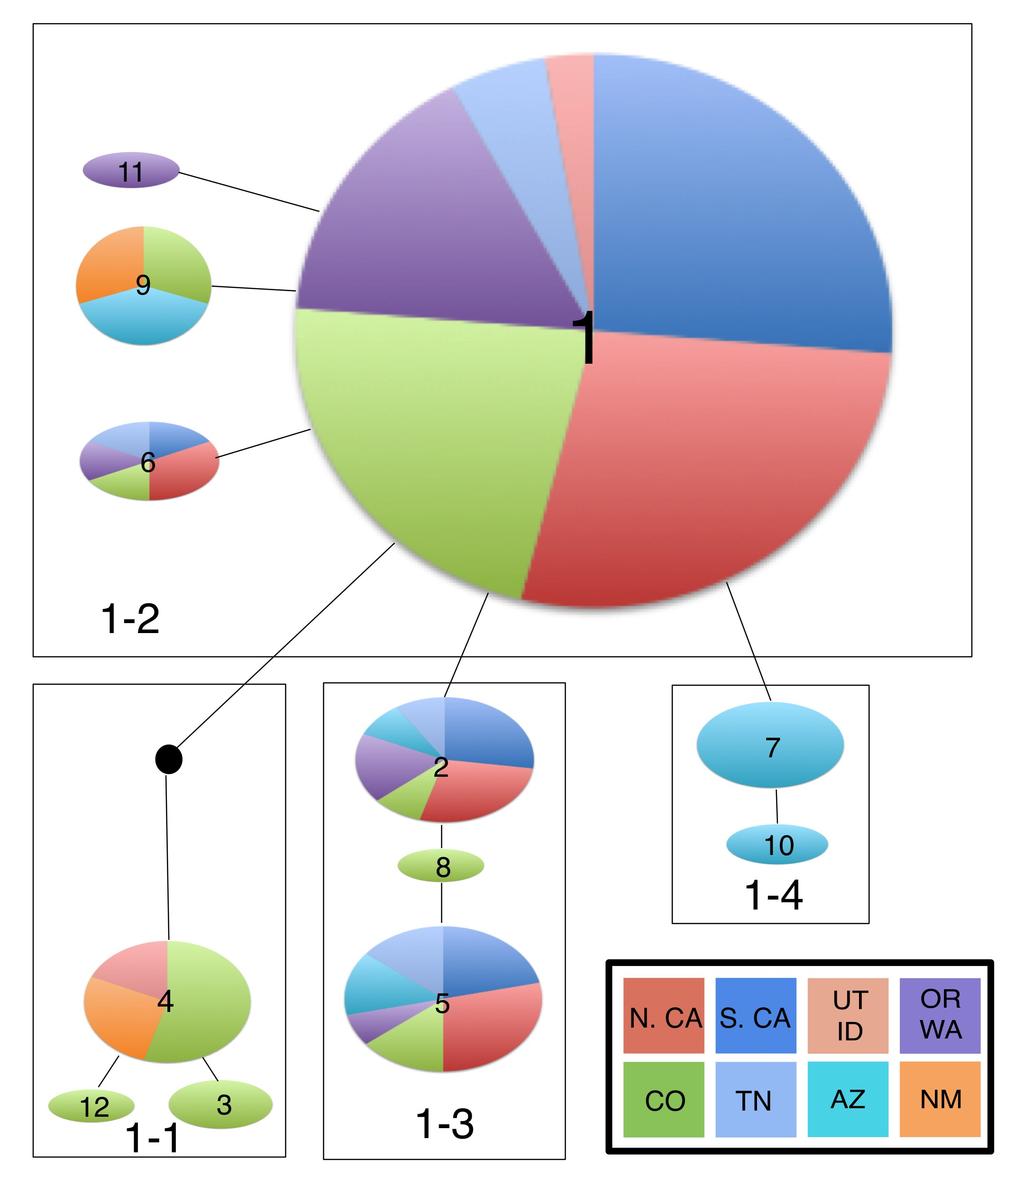 Figure 2.2 The relationships among rdna ITS haplotypes of Geosmithia morbida. Each circle represents a unique ITS haplotype.